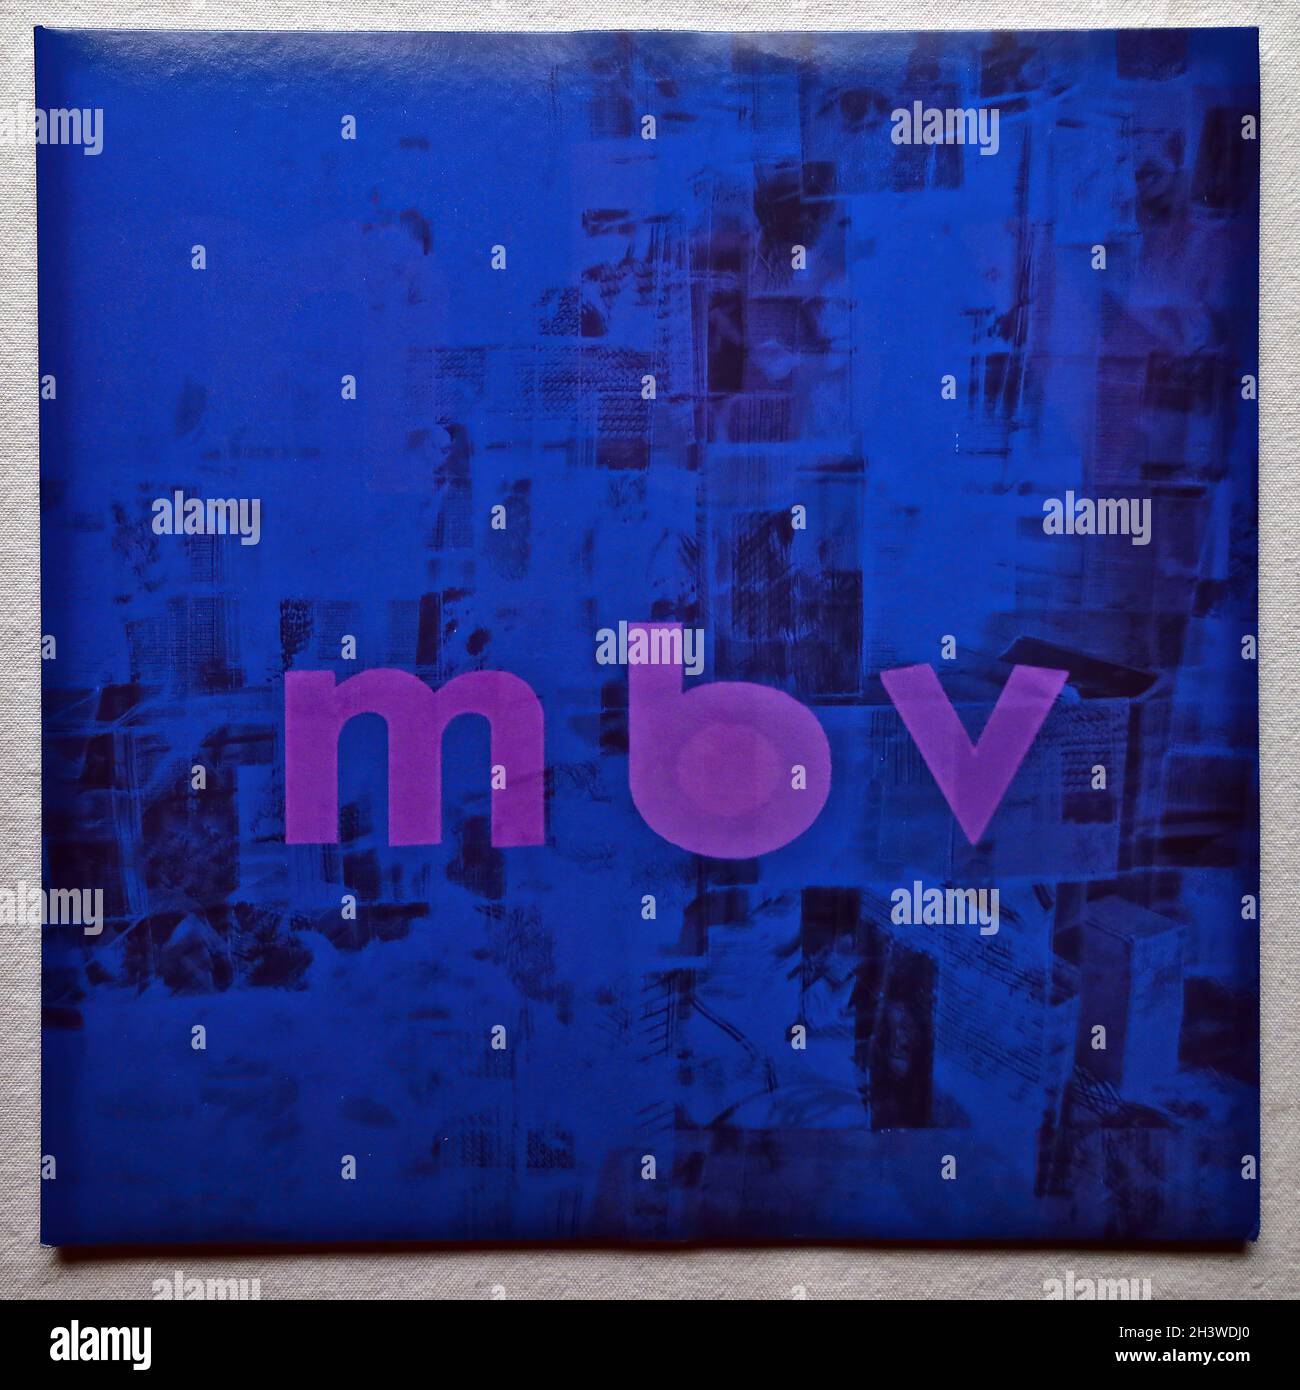 My Bloody Valentine 2013 Mbv Vinyl Record Album A Stock Photo